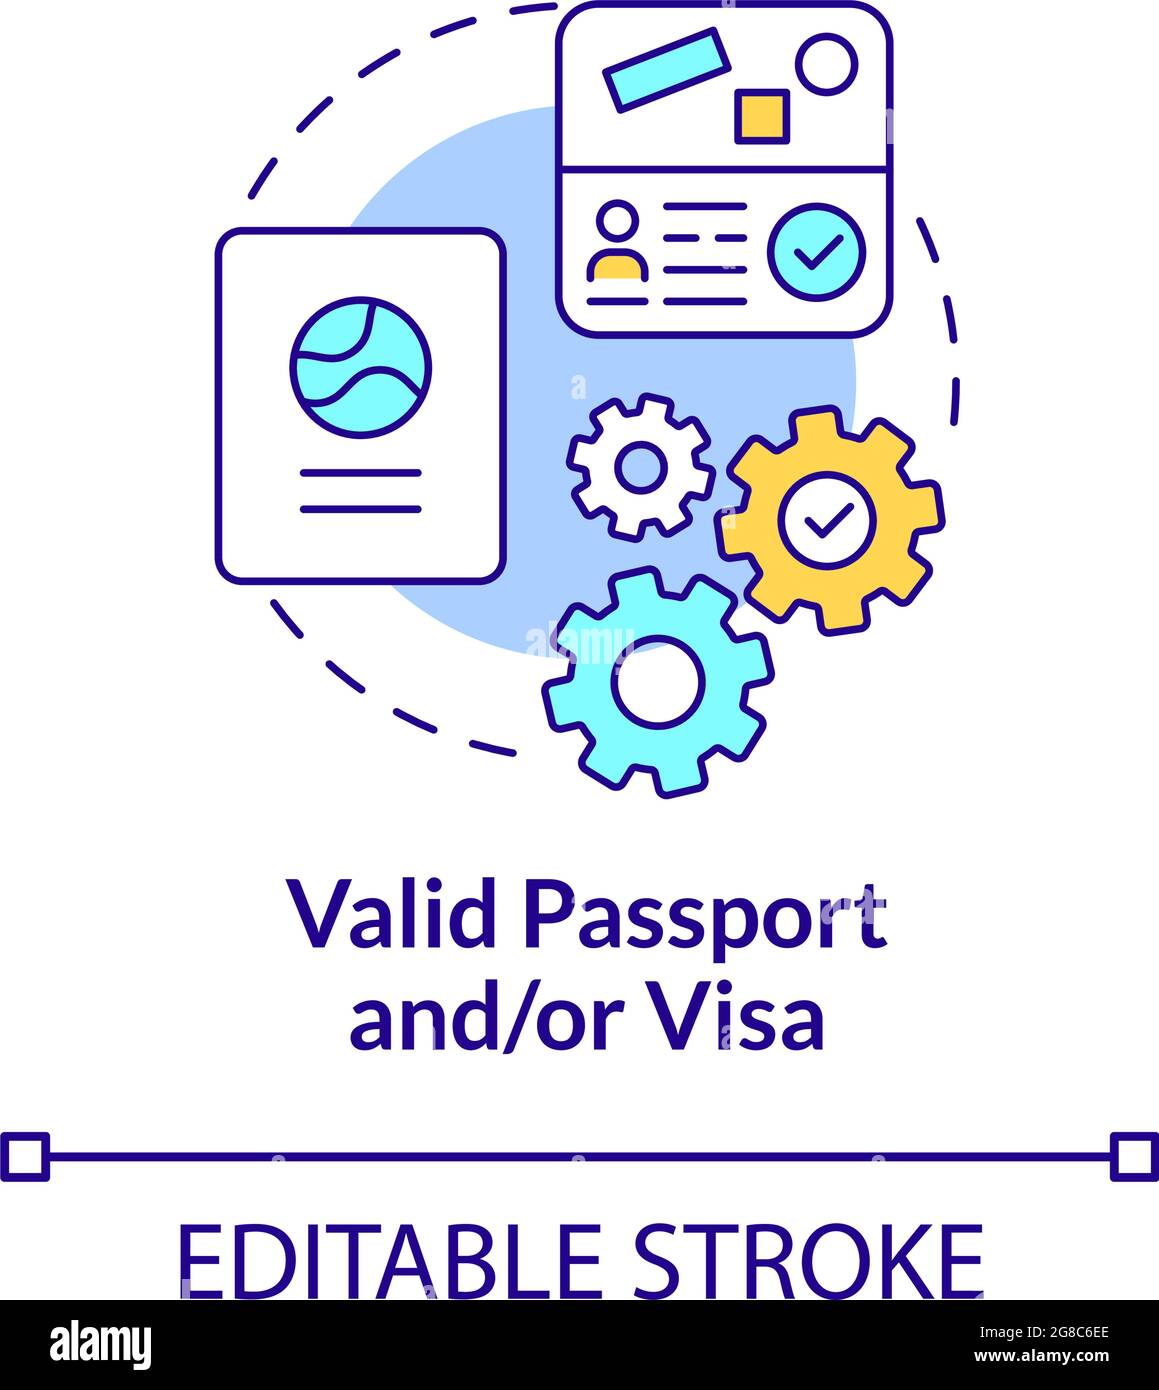 Valid passport and visa concept icon Stock Vector Image & Art - Alamy